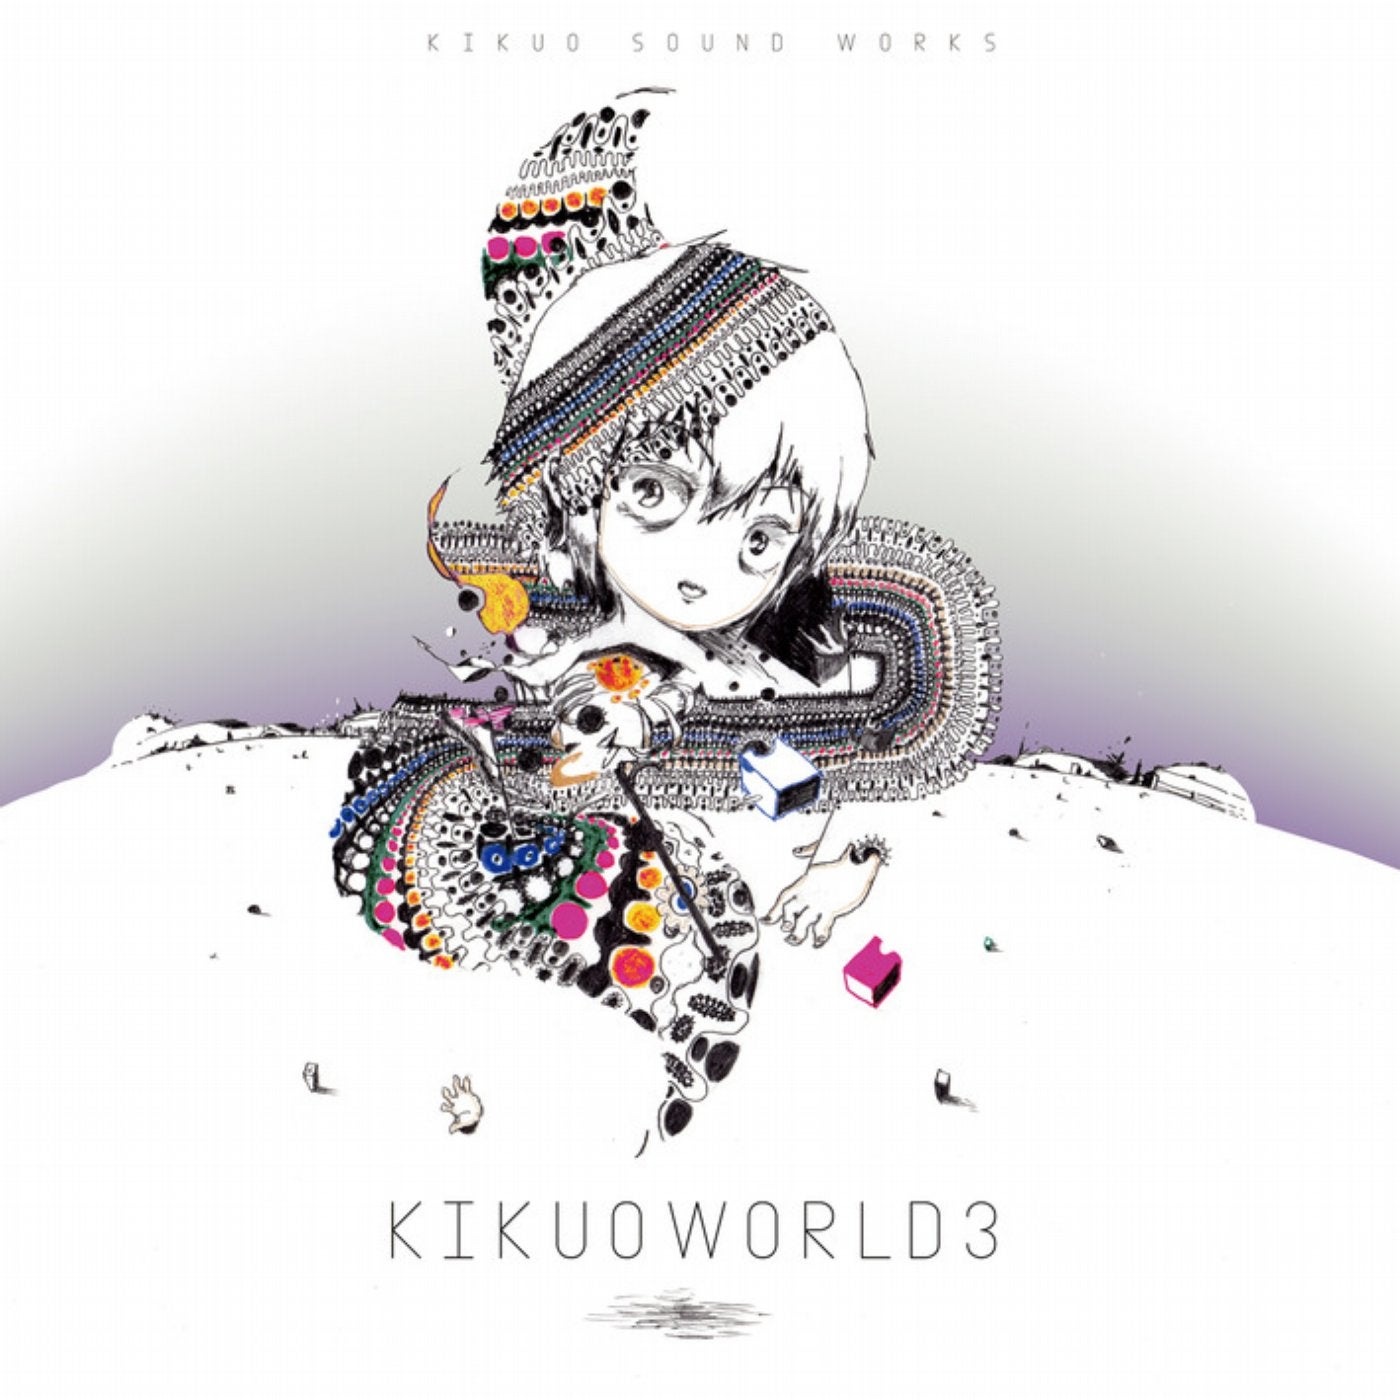 KIKUOWORLD3 - Sight, Noise, Life and the Earth